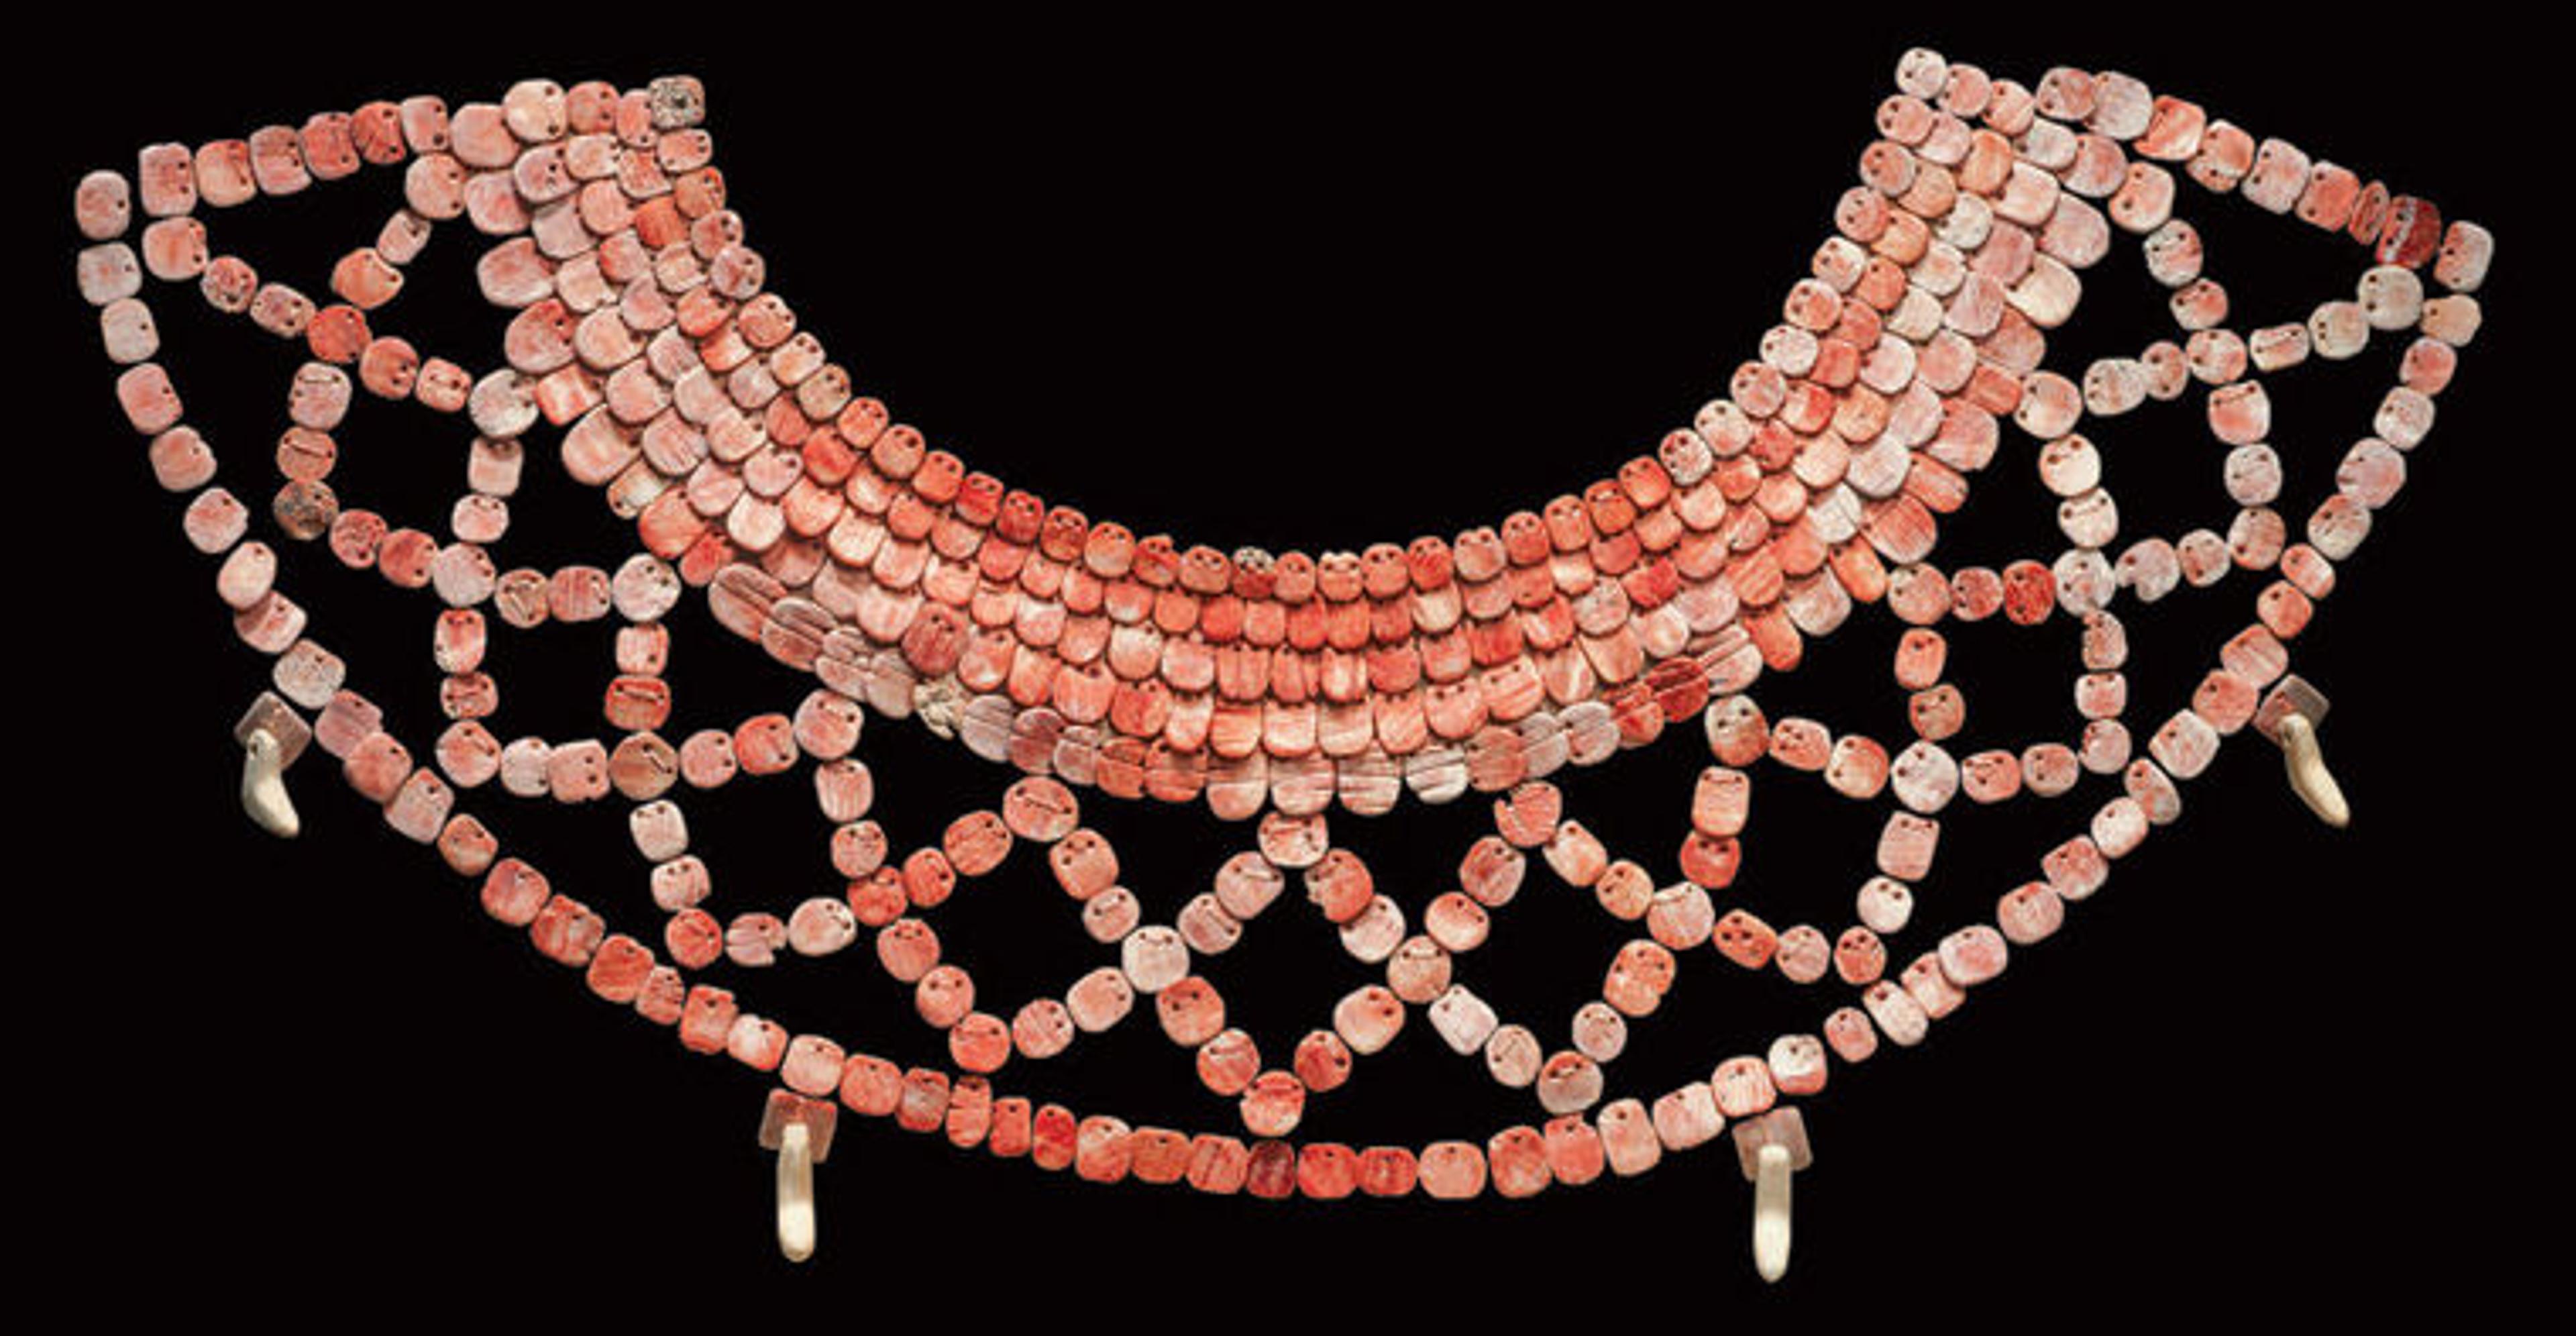 An ancient Maya collar made of various shells